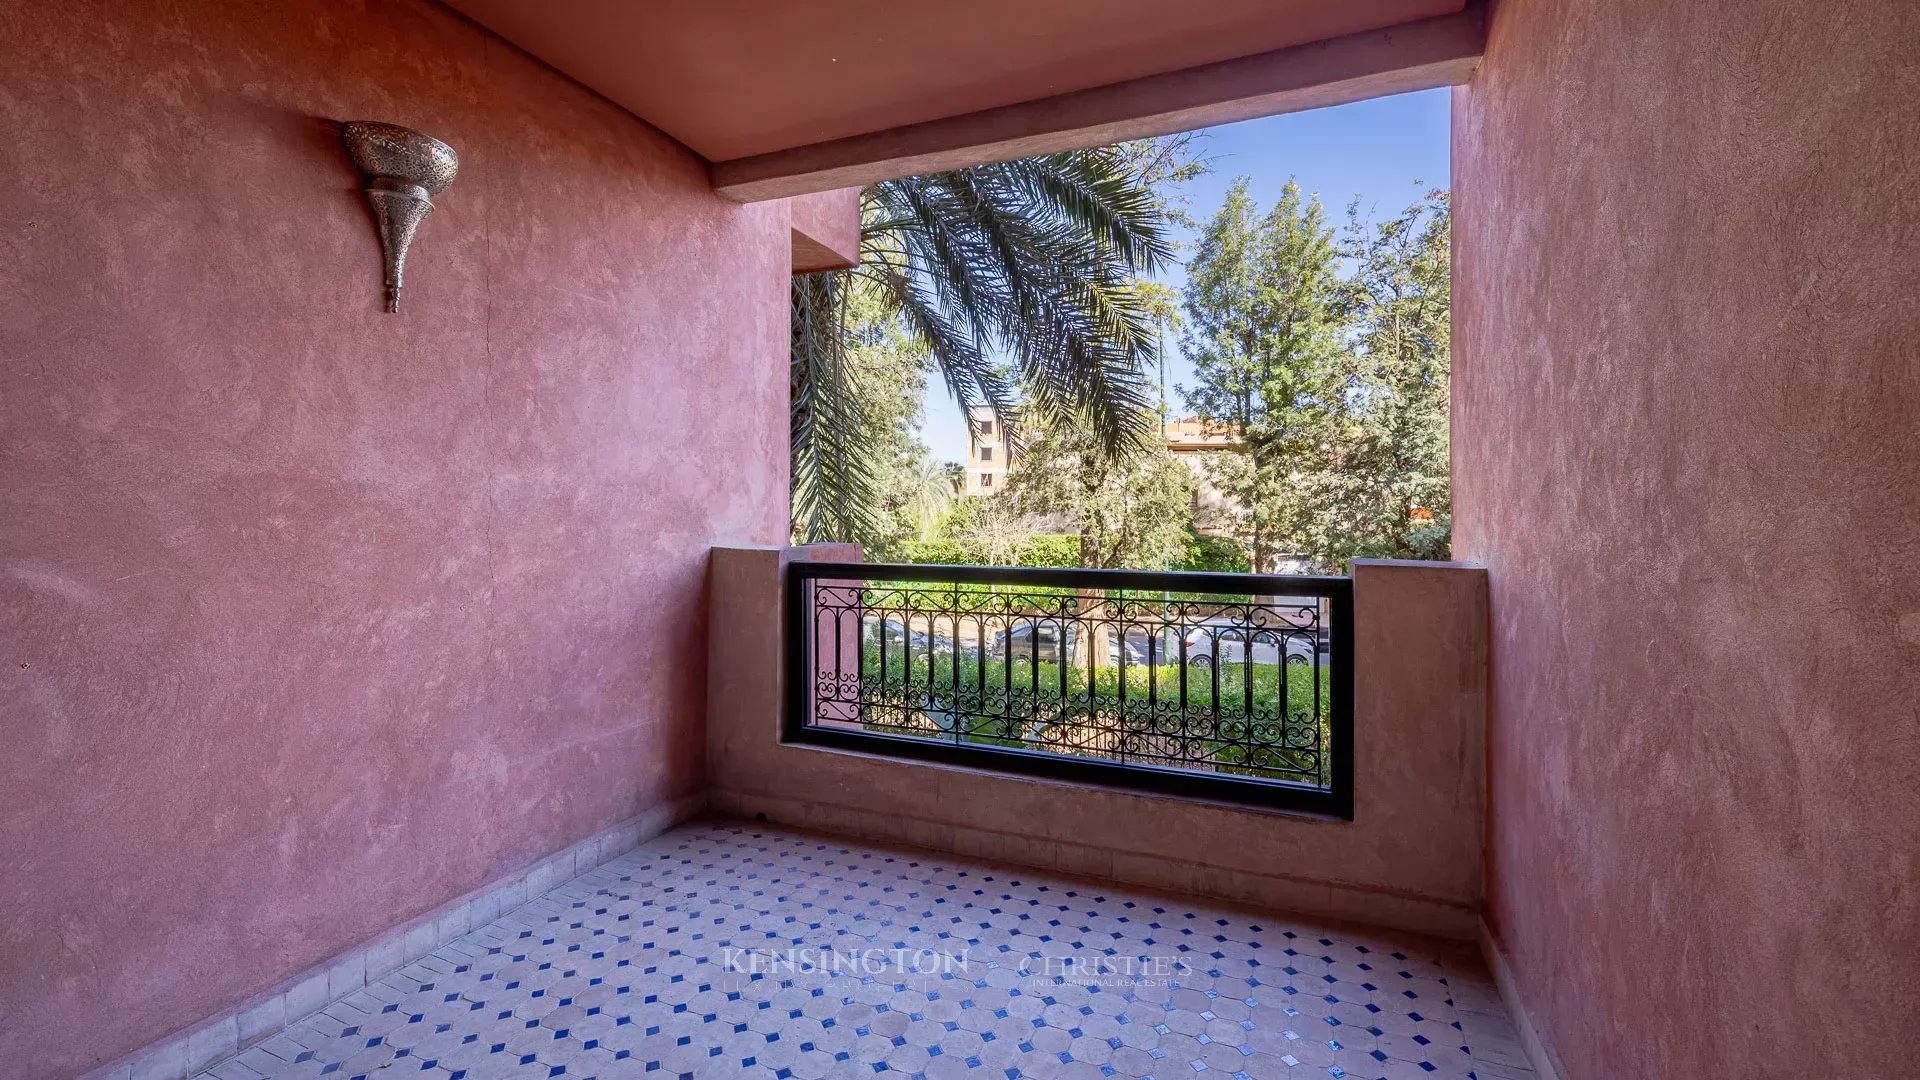 Appartement Kito in Marrakech, Morocco